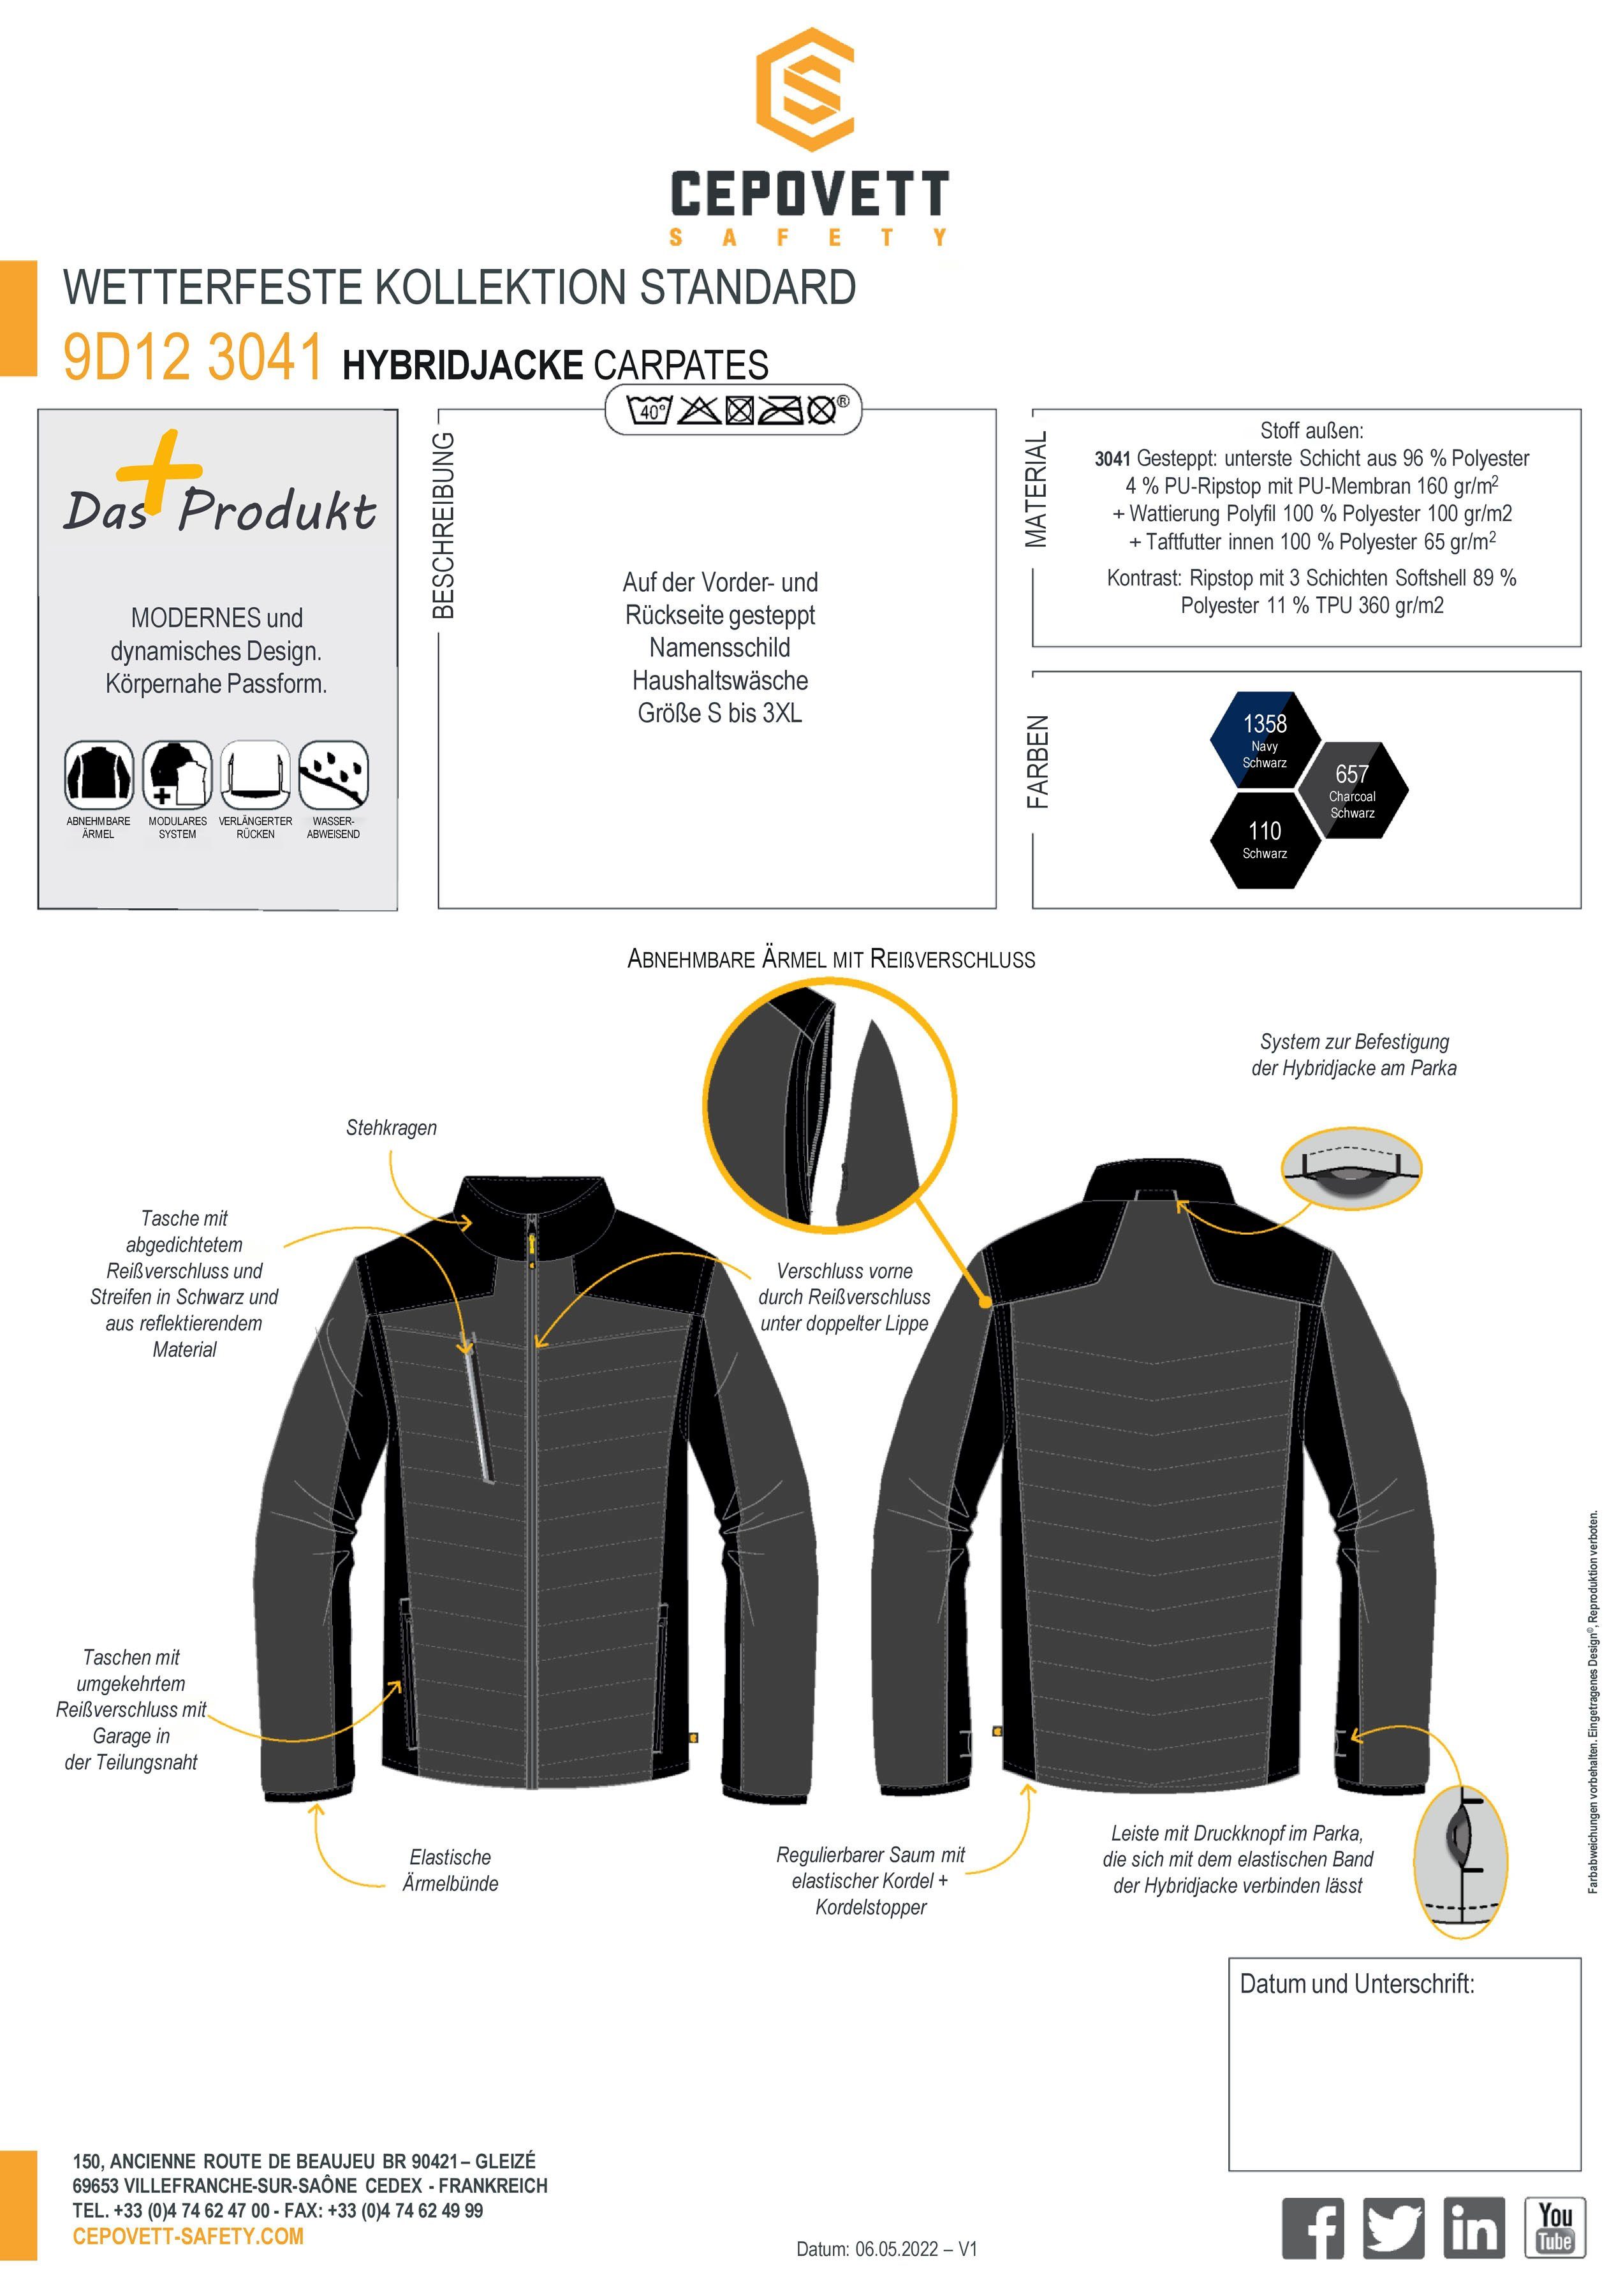 Unisex Modul'wear CHARCOAL Softshelljacke abriebfest, System wasserabweisend, SCHWARZ / Cepovett "Carpates" GREY